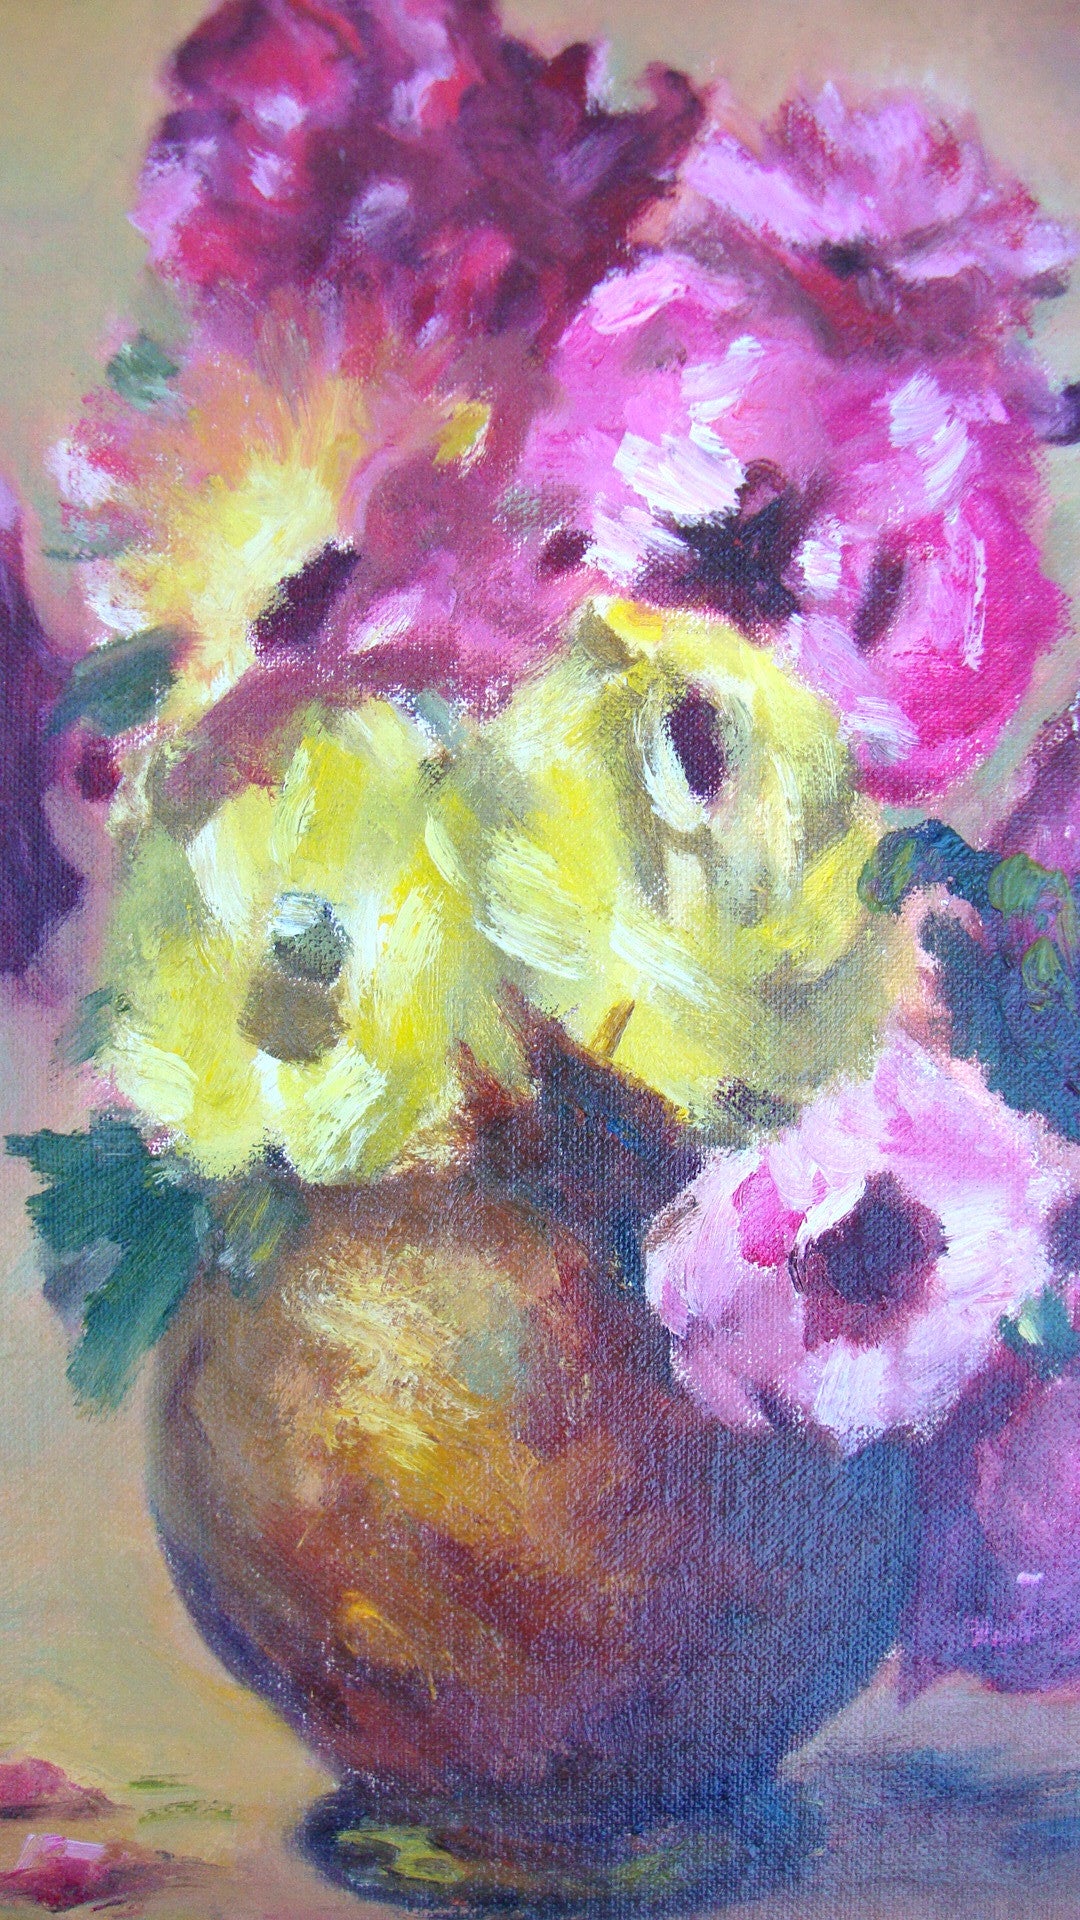 Lousie Johnson Painting - Pastel Flowers in Bowl